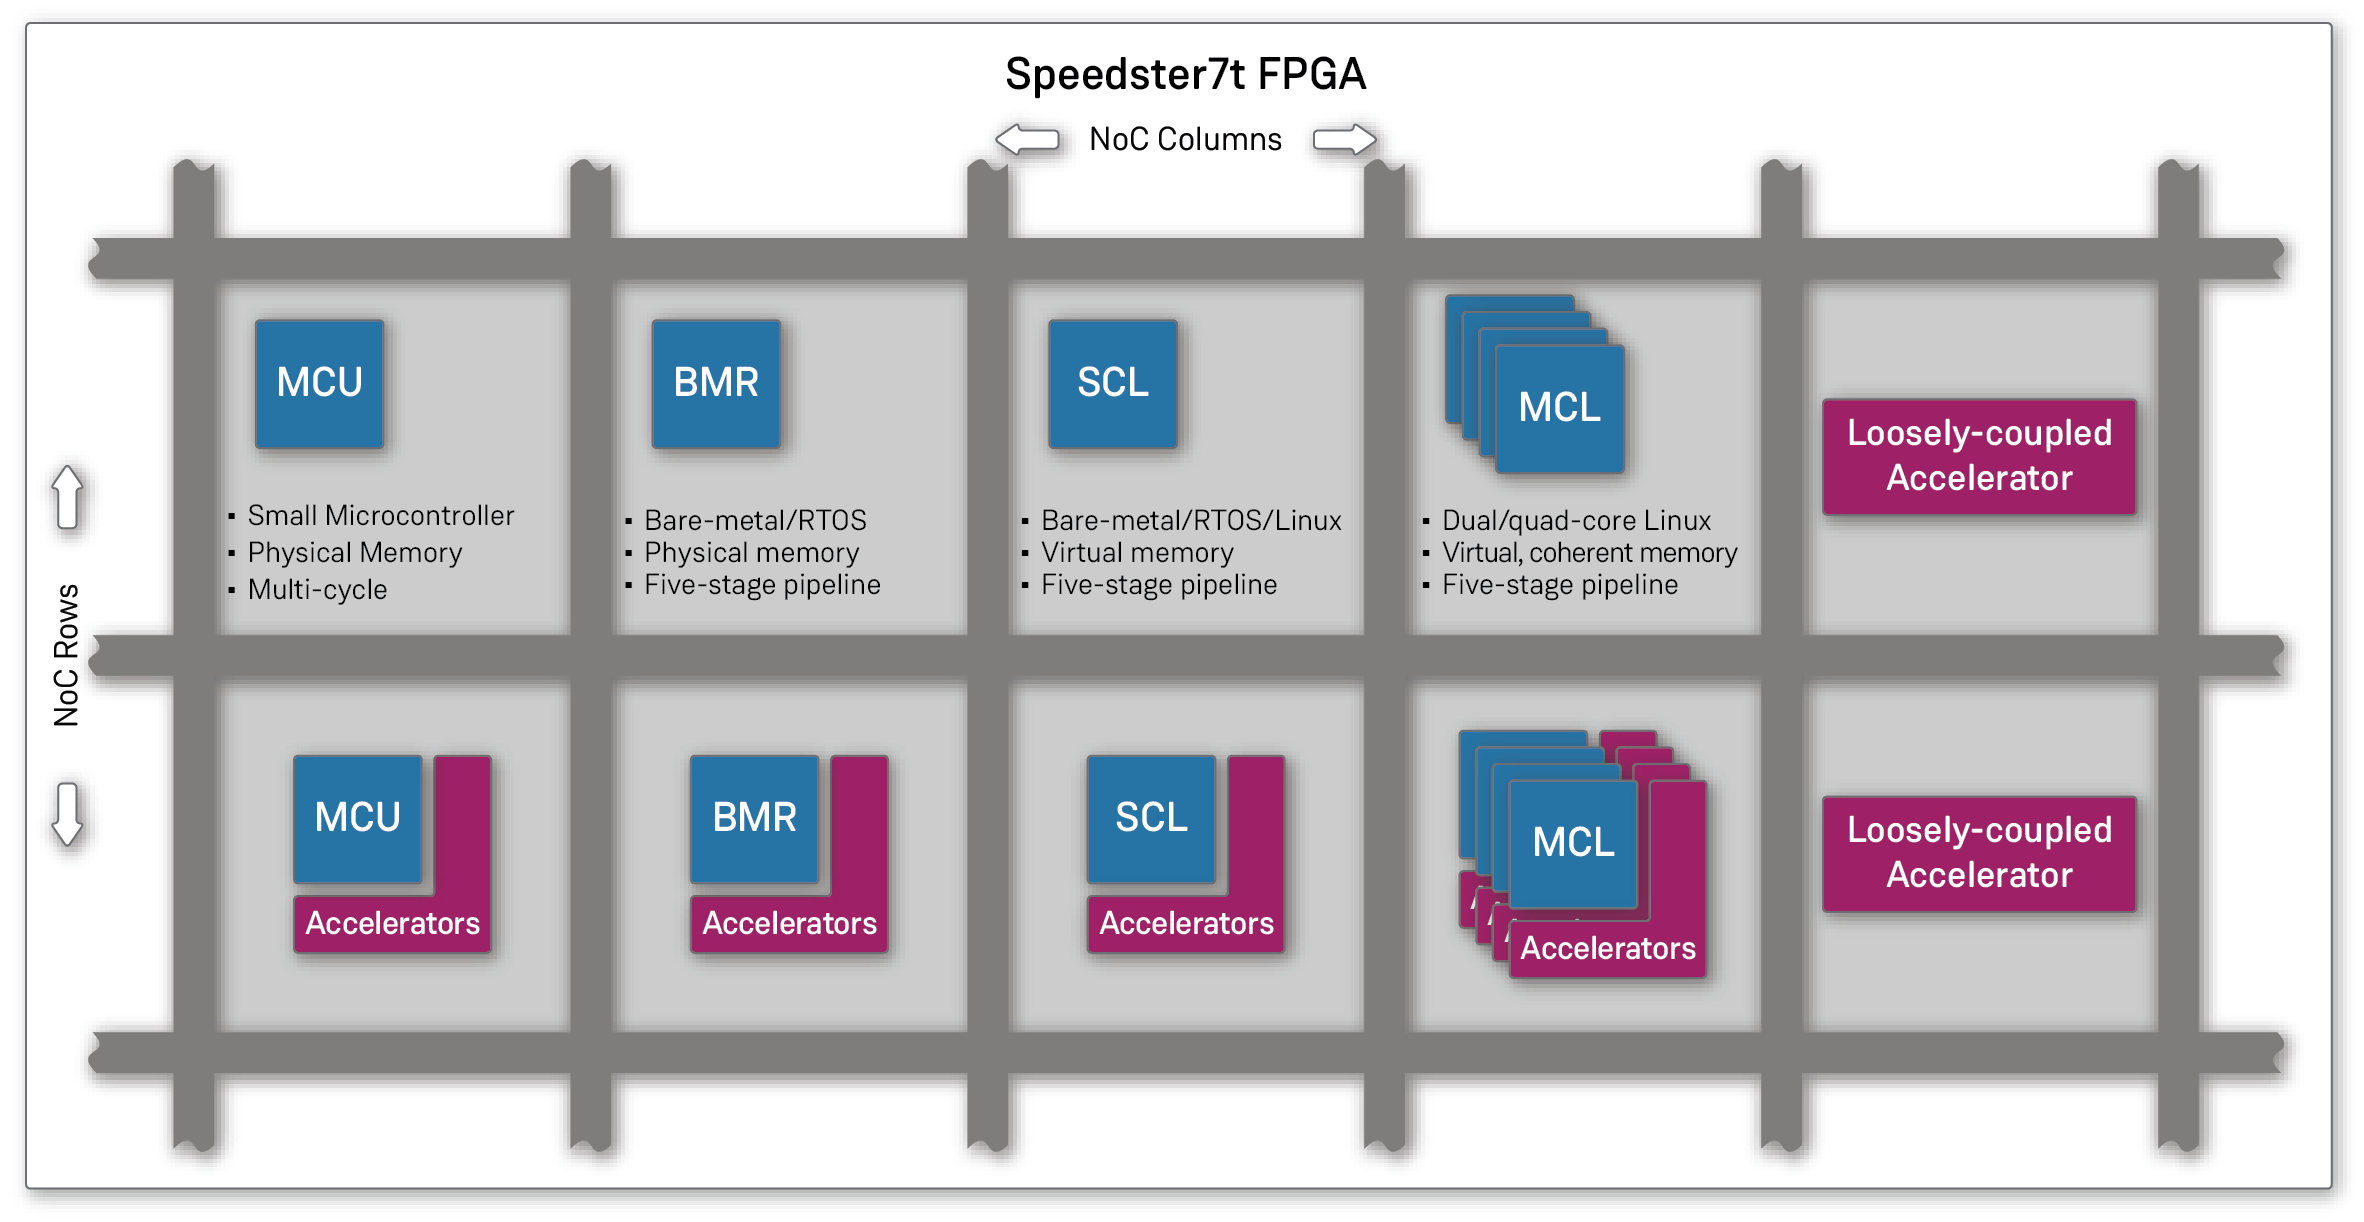 RISC-V in Speedster7t FPGAs